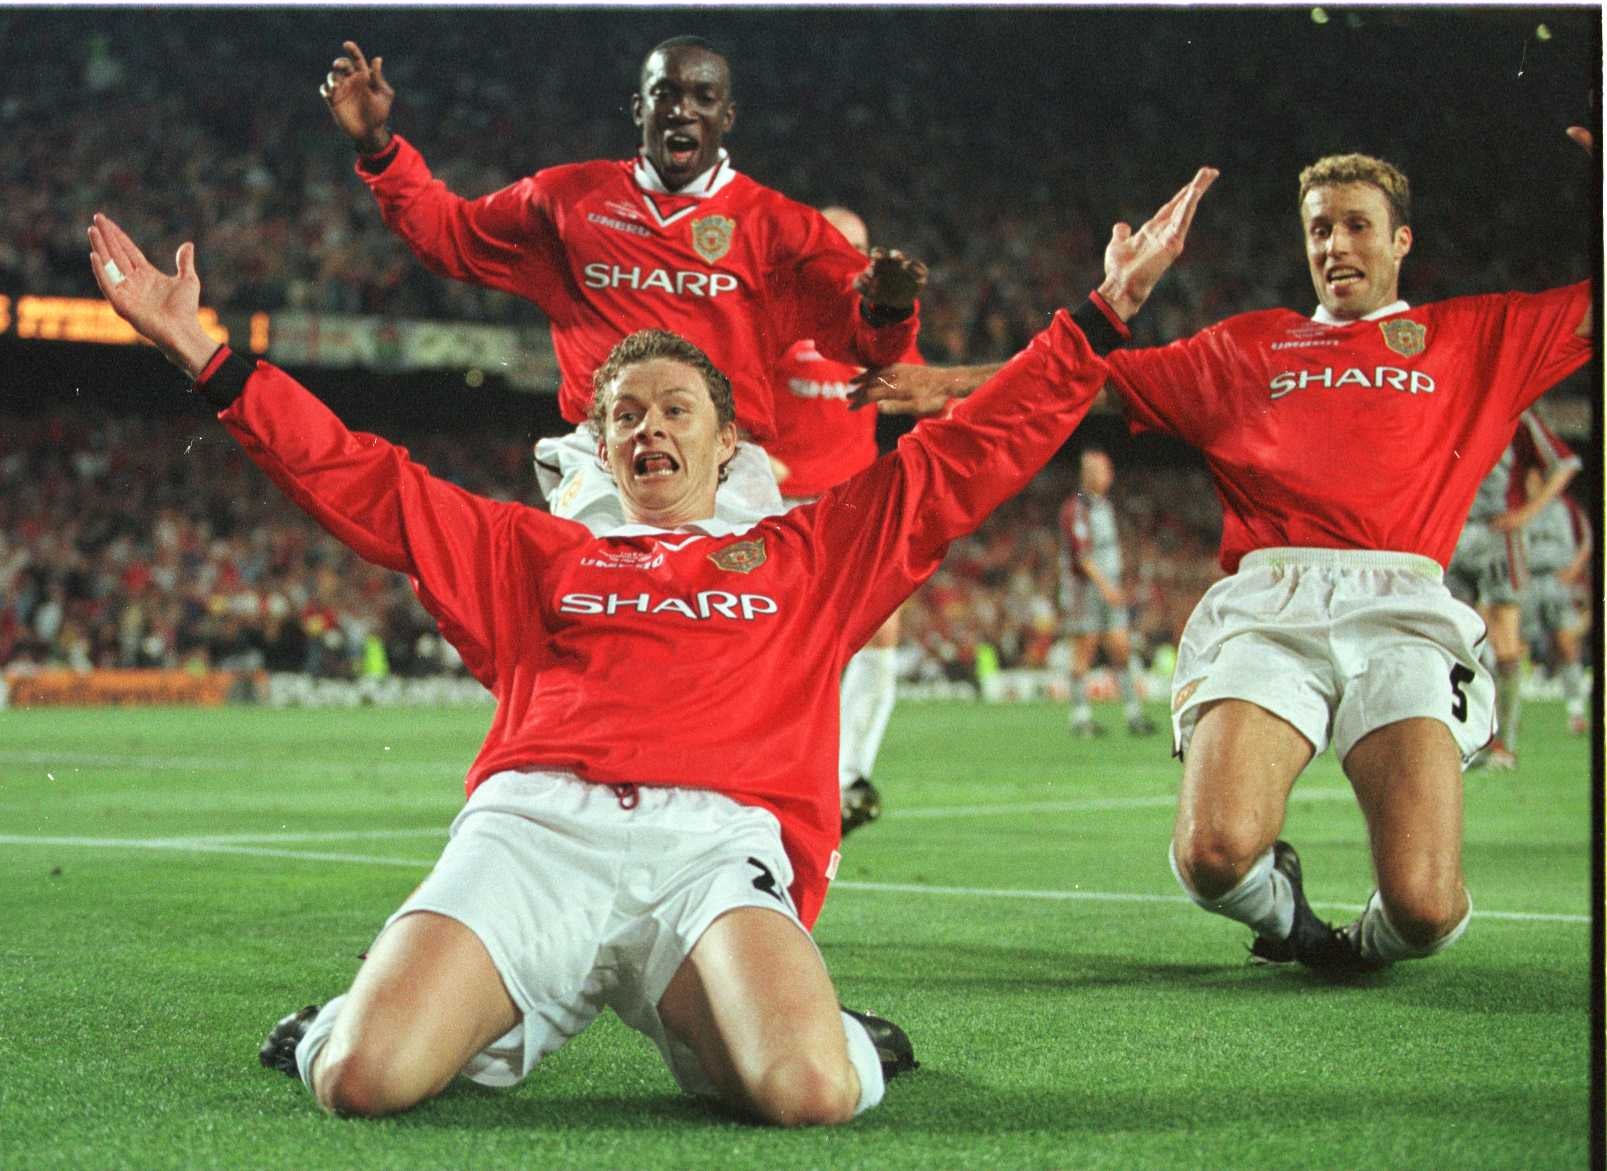 Ole Gunnar Solskjaer celebrates scoring the winning goal that secured Manchester United a treble.